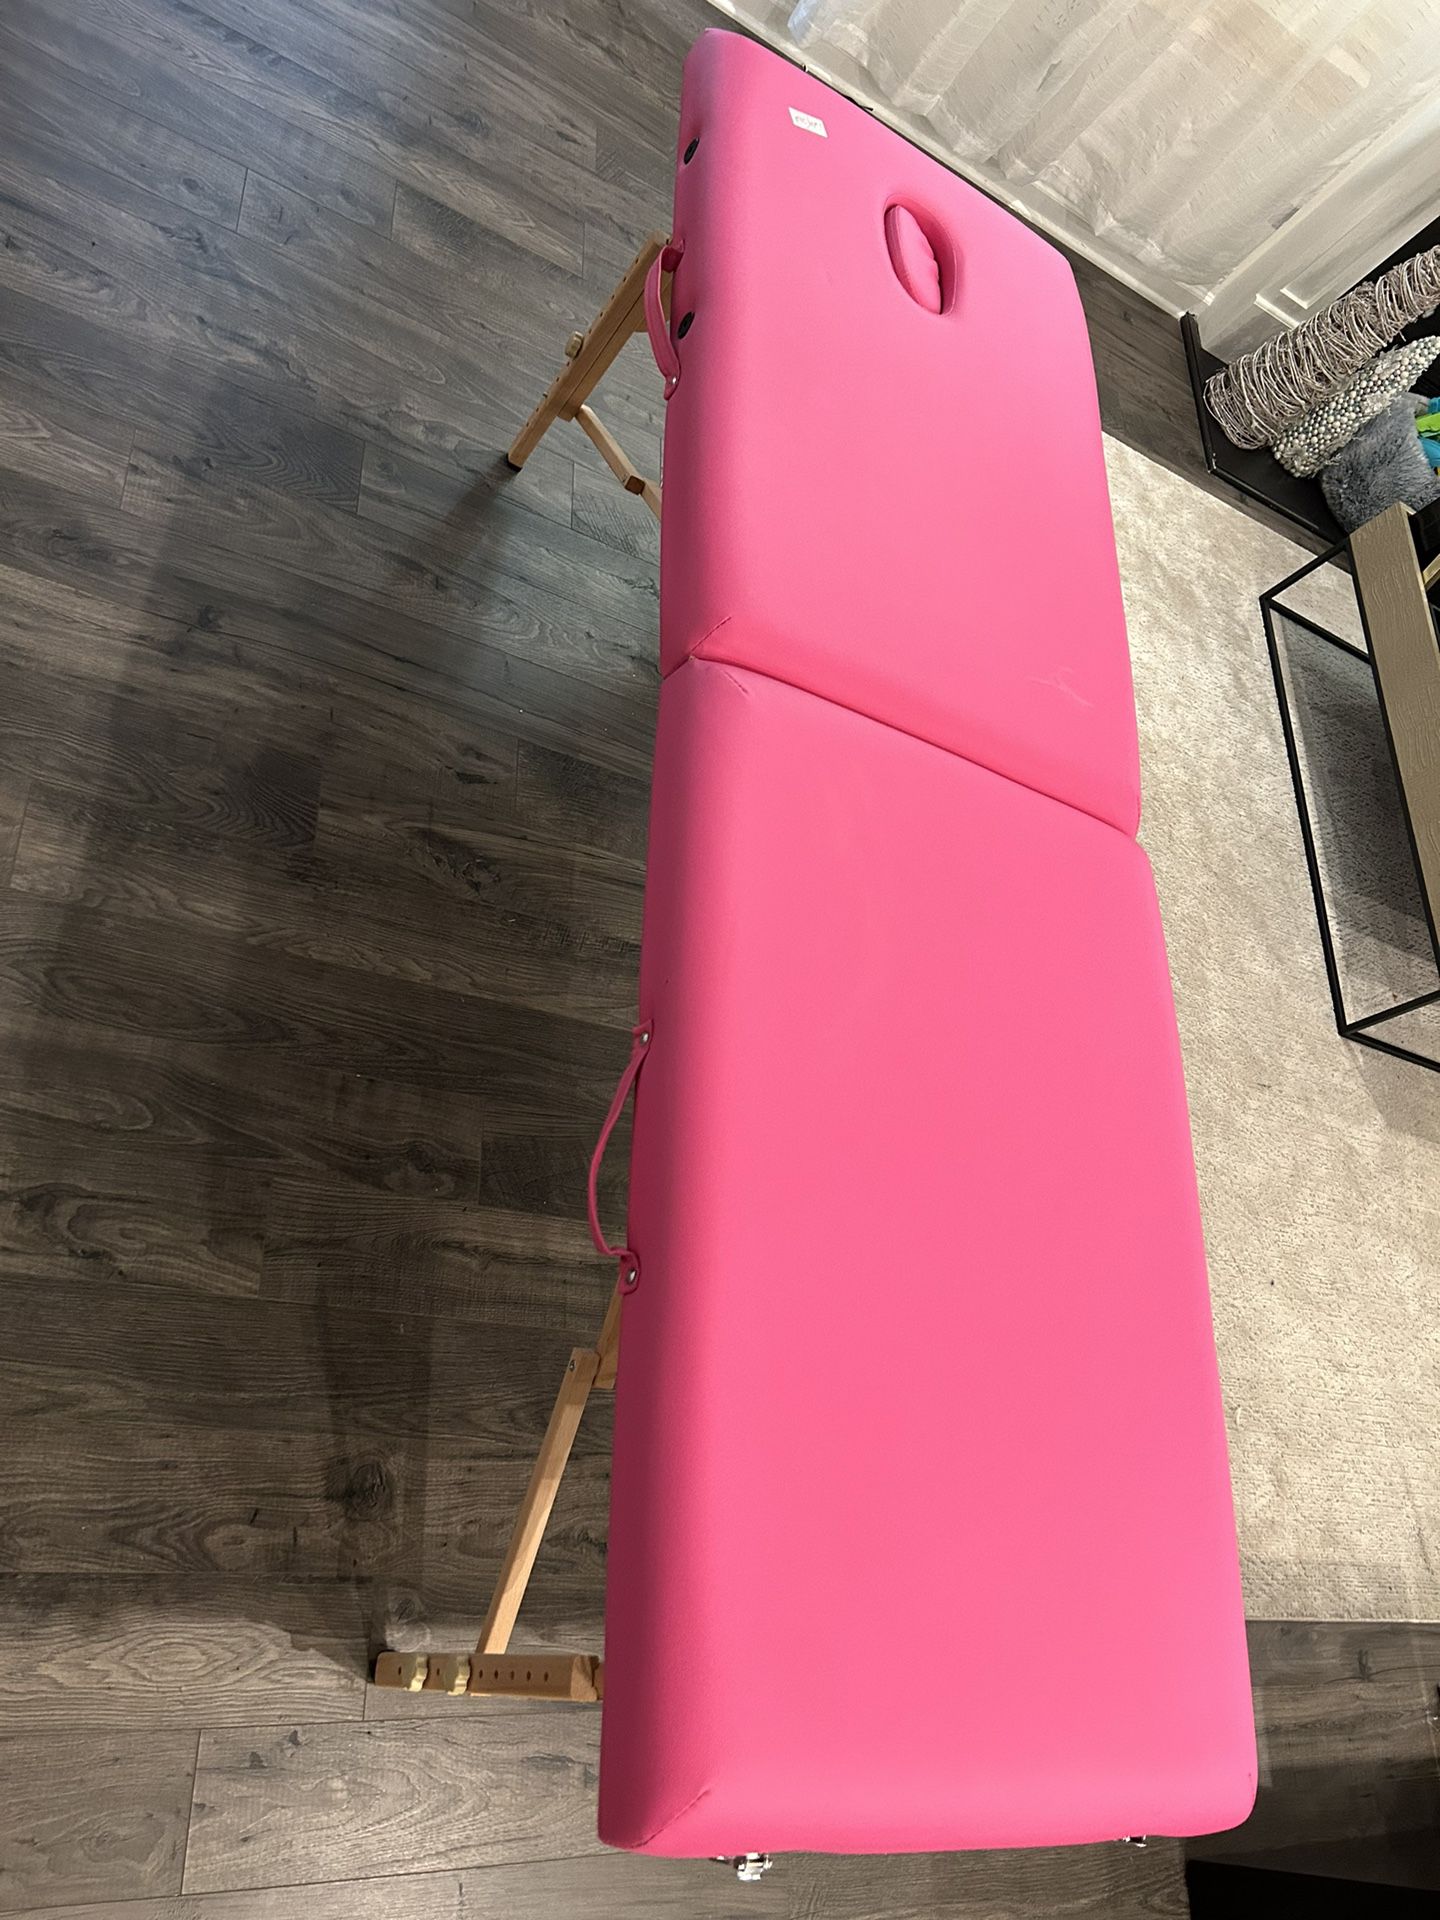 Pink massage table